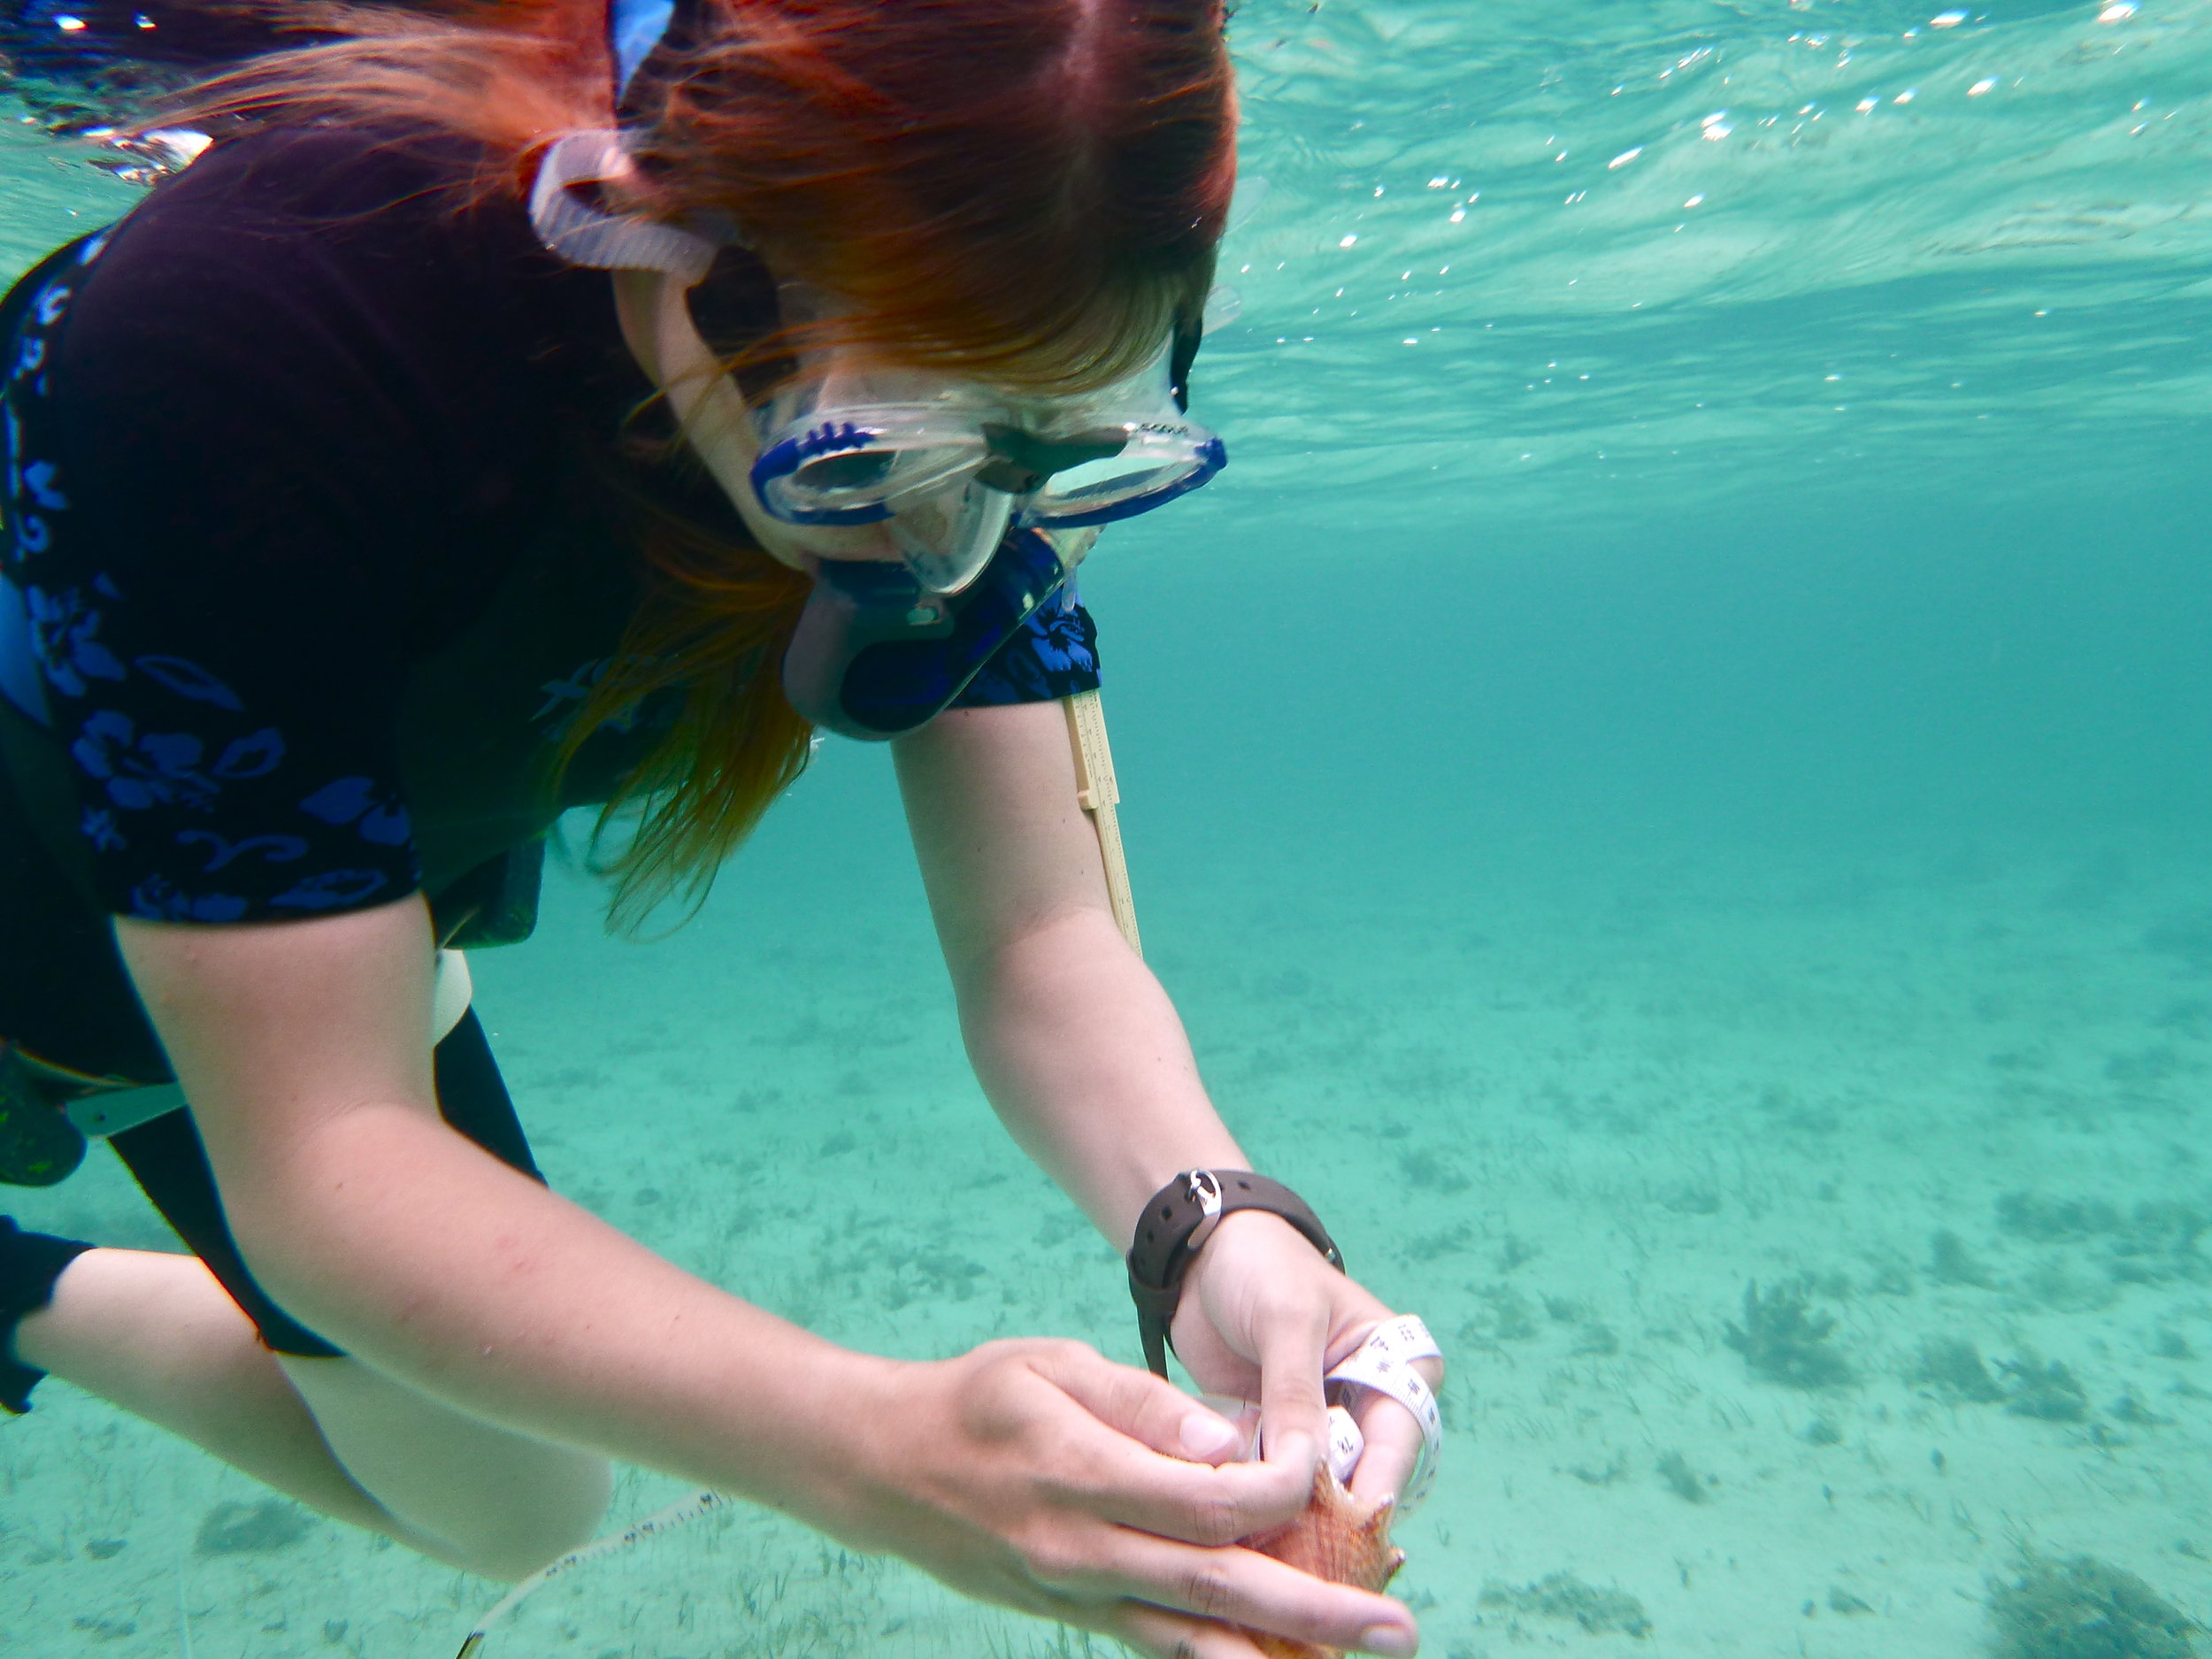 Team member Rey measure conch siphonal length.